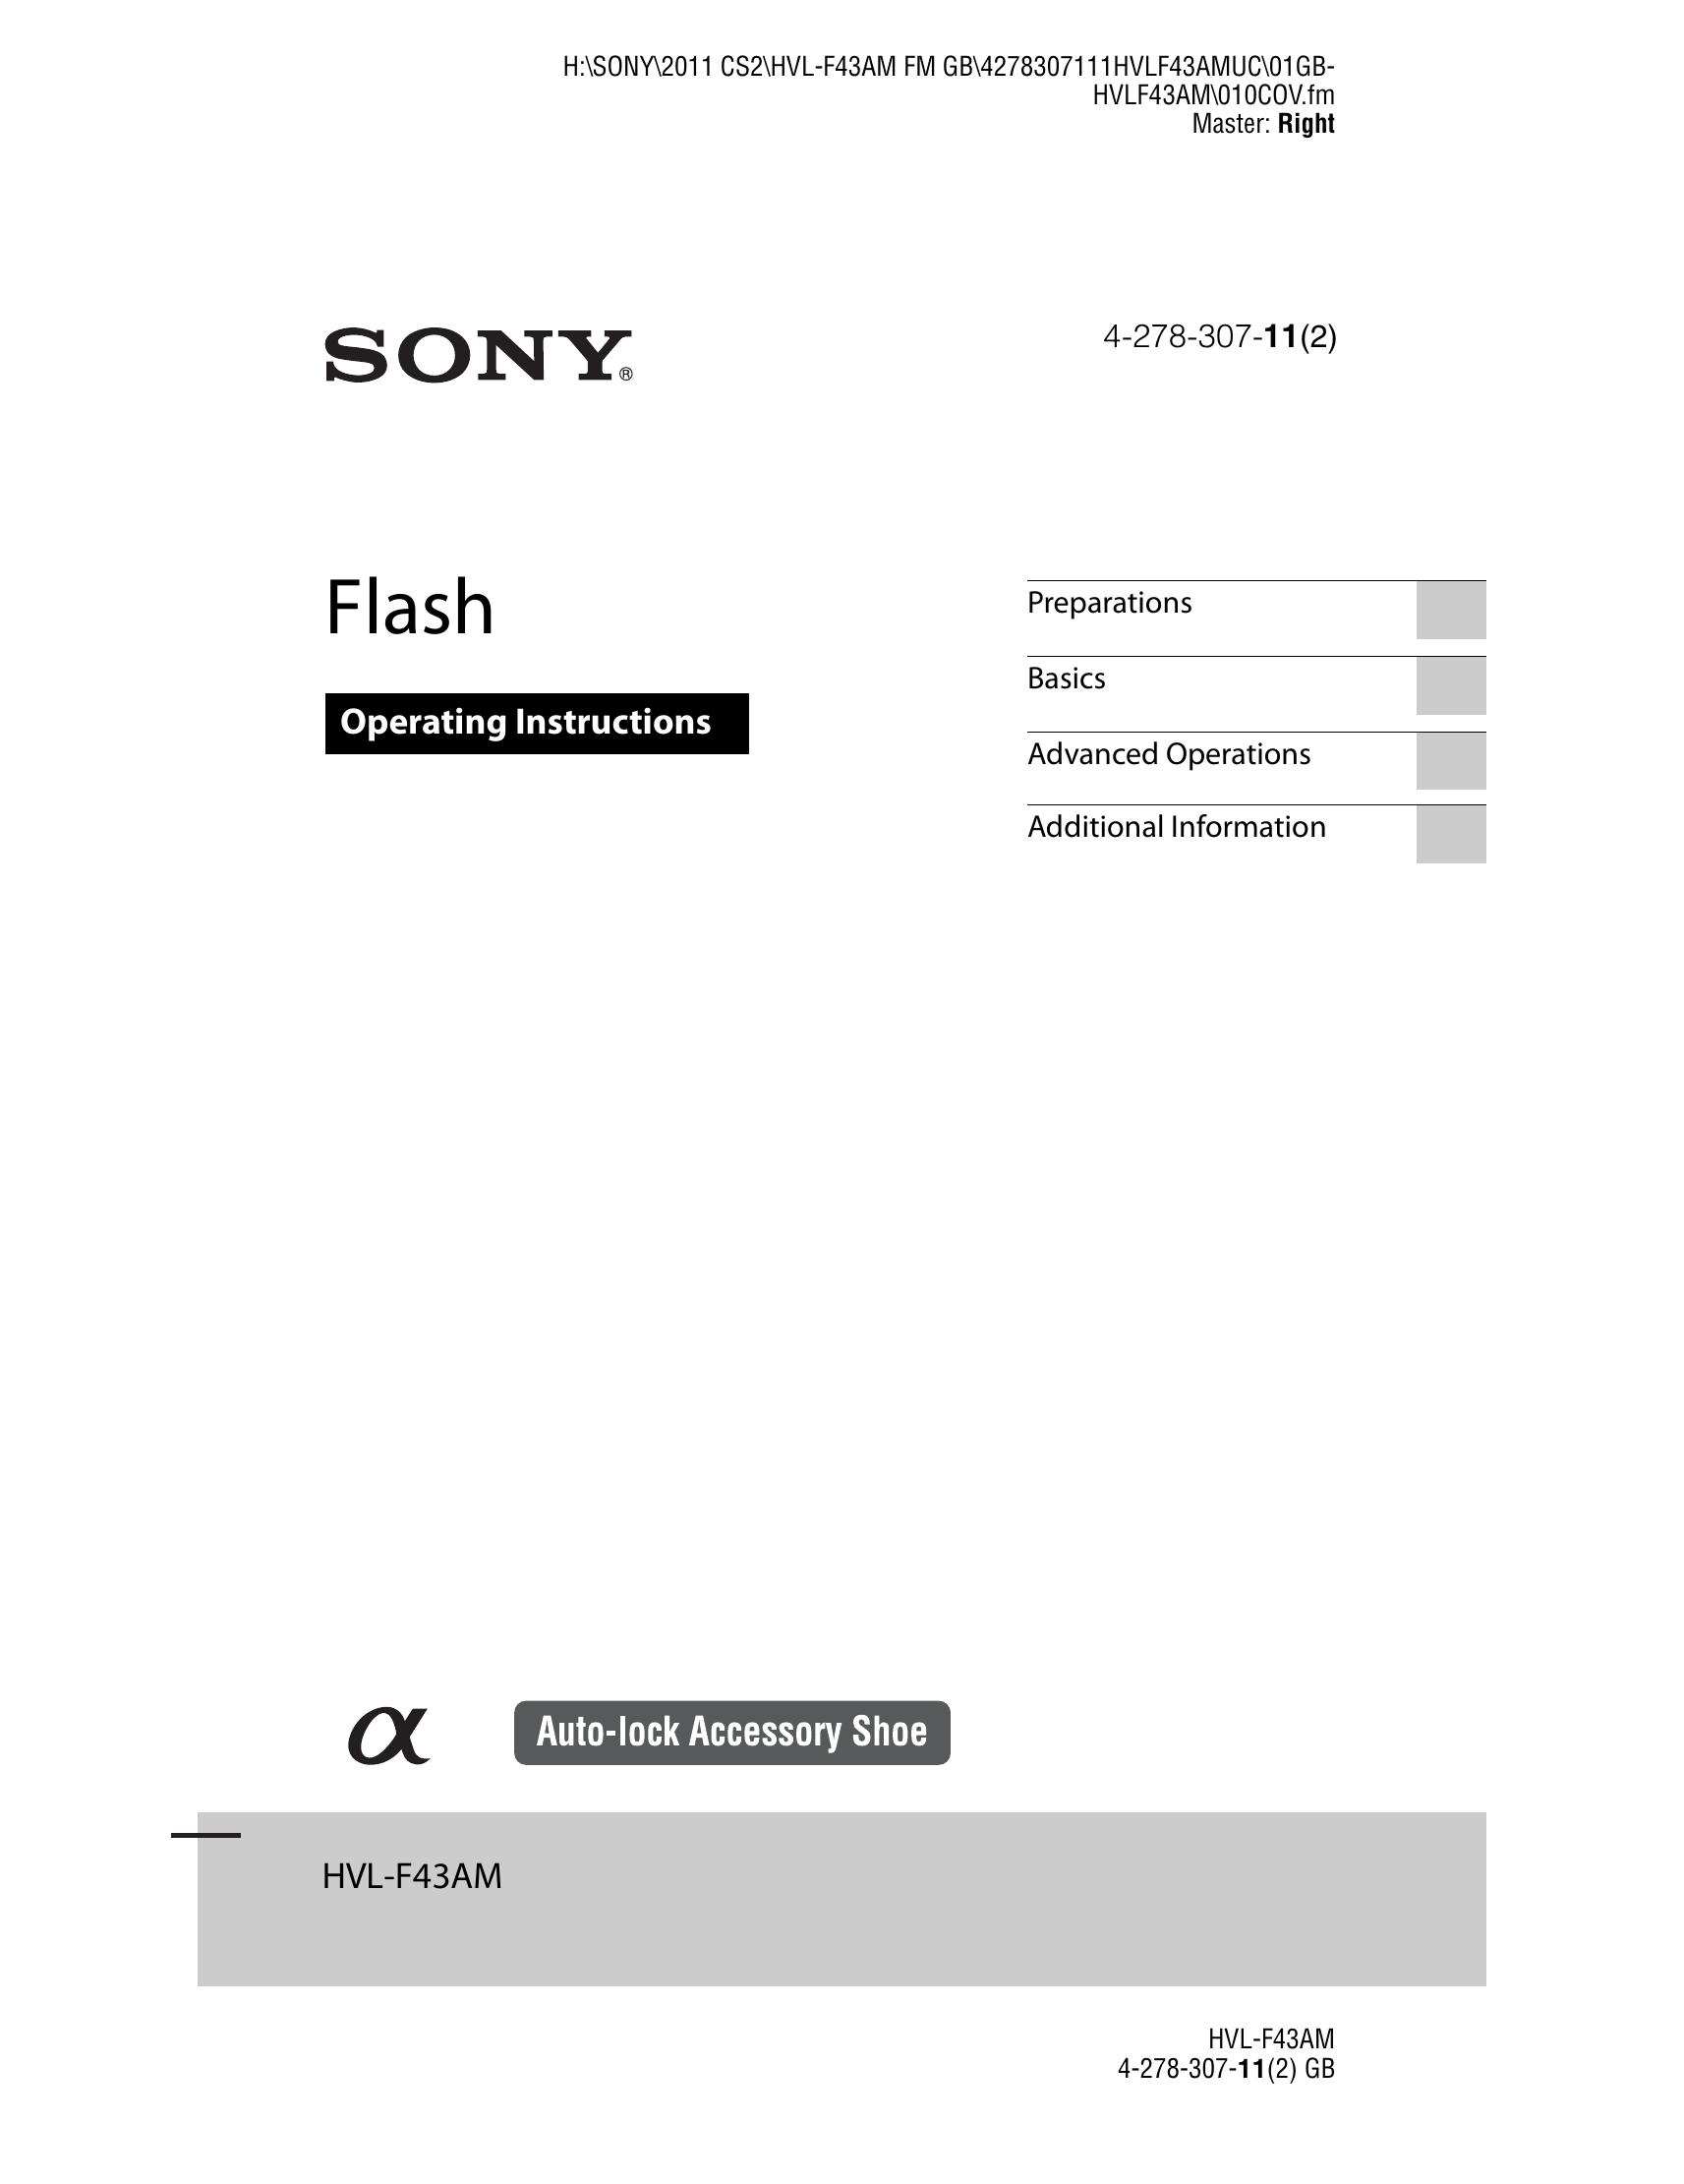 Sony HVL-F43AM Camera Flash User Manual